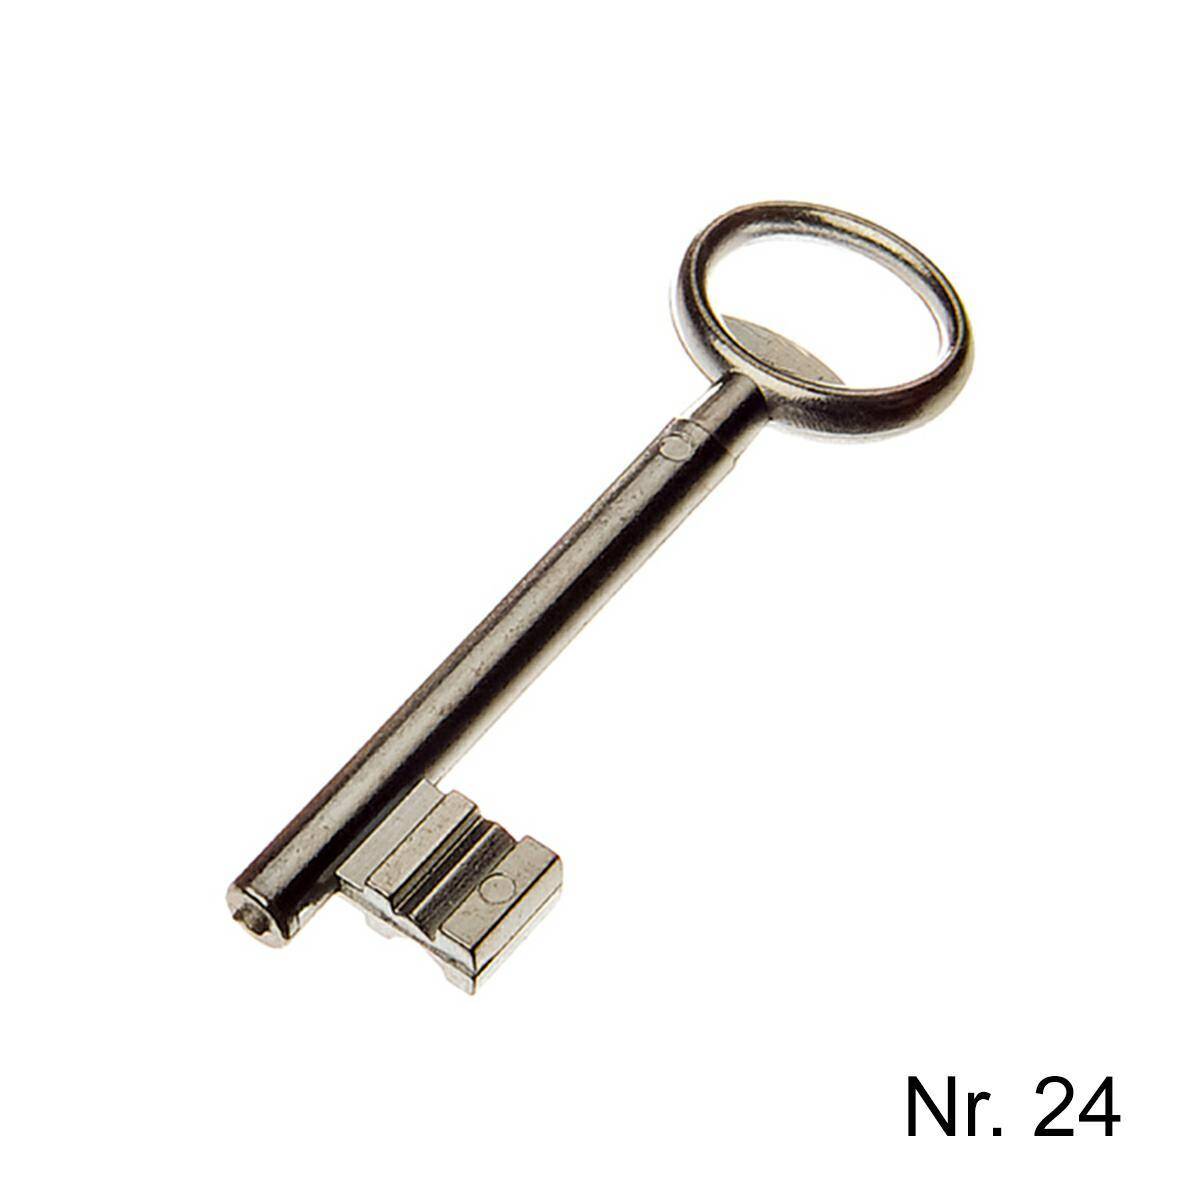 Jania Cast key for the lock - No. 24